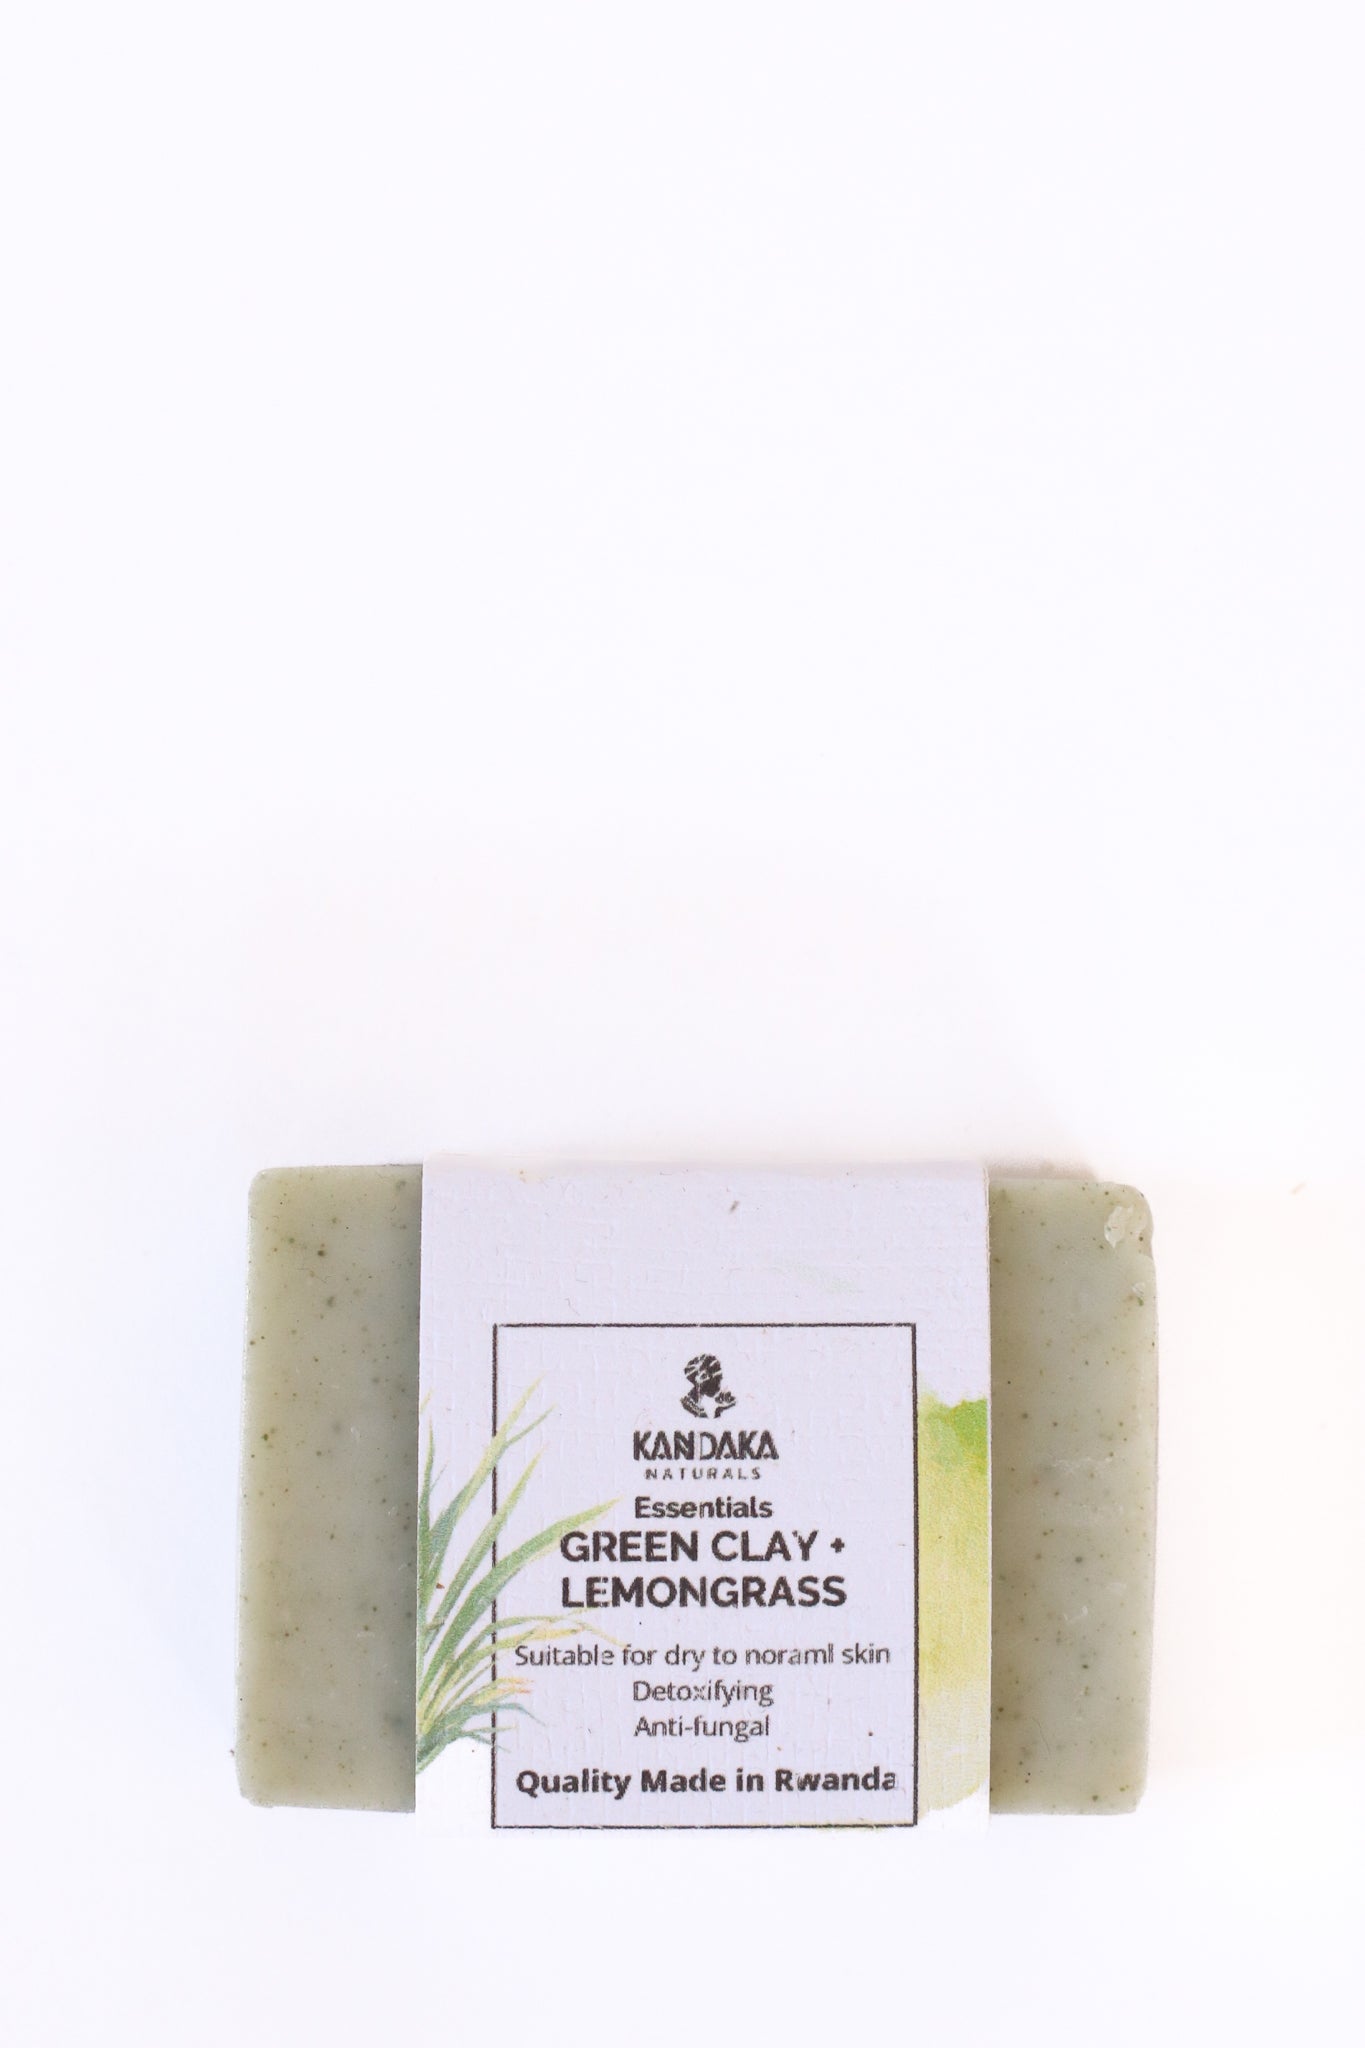 Green Clay + Lemongrass Soap